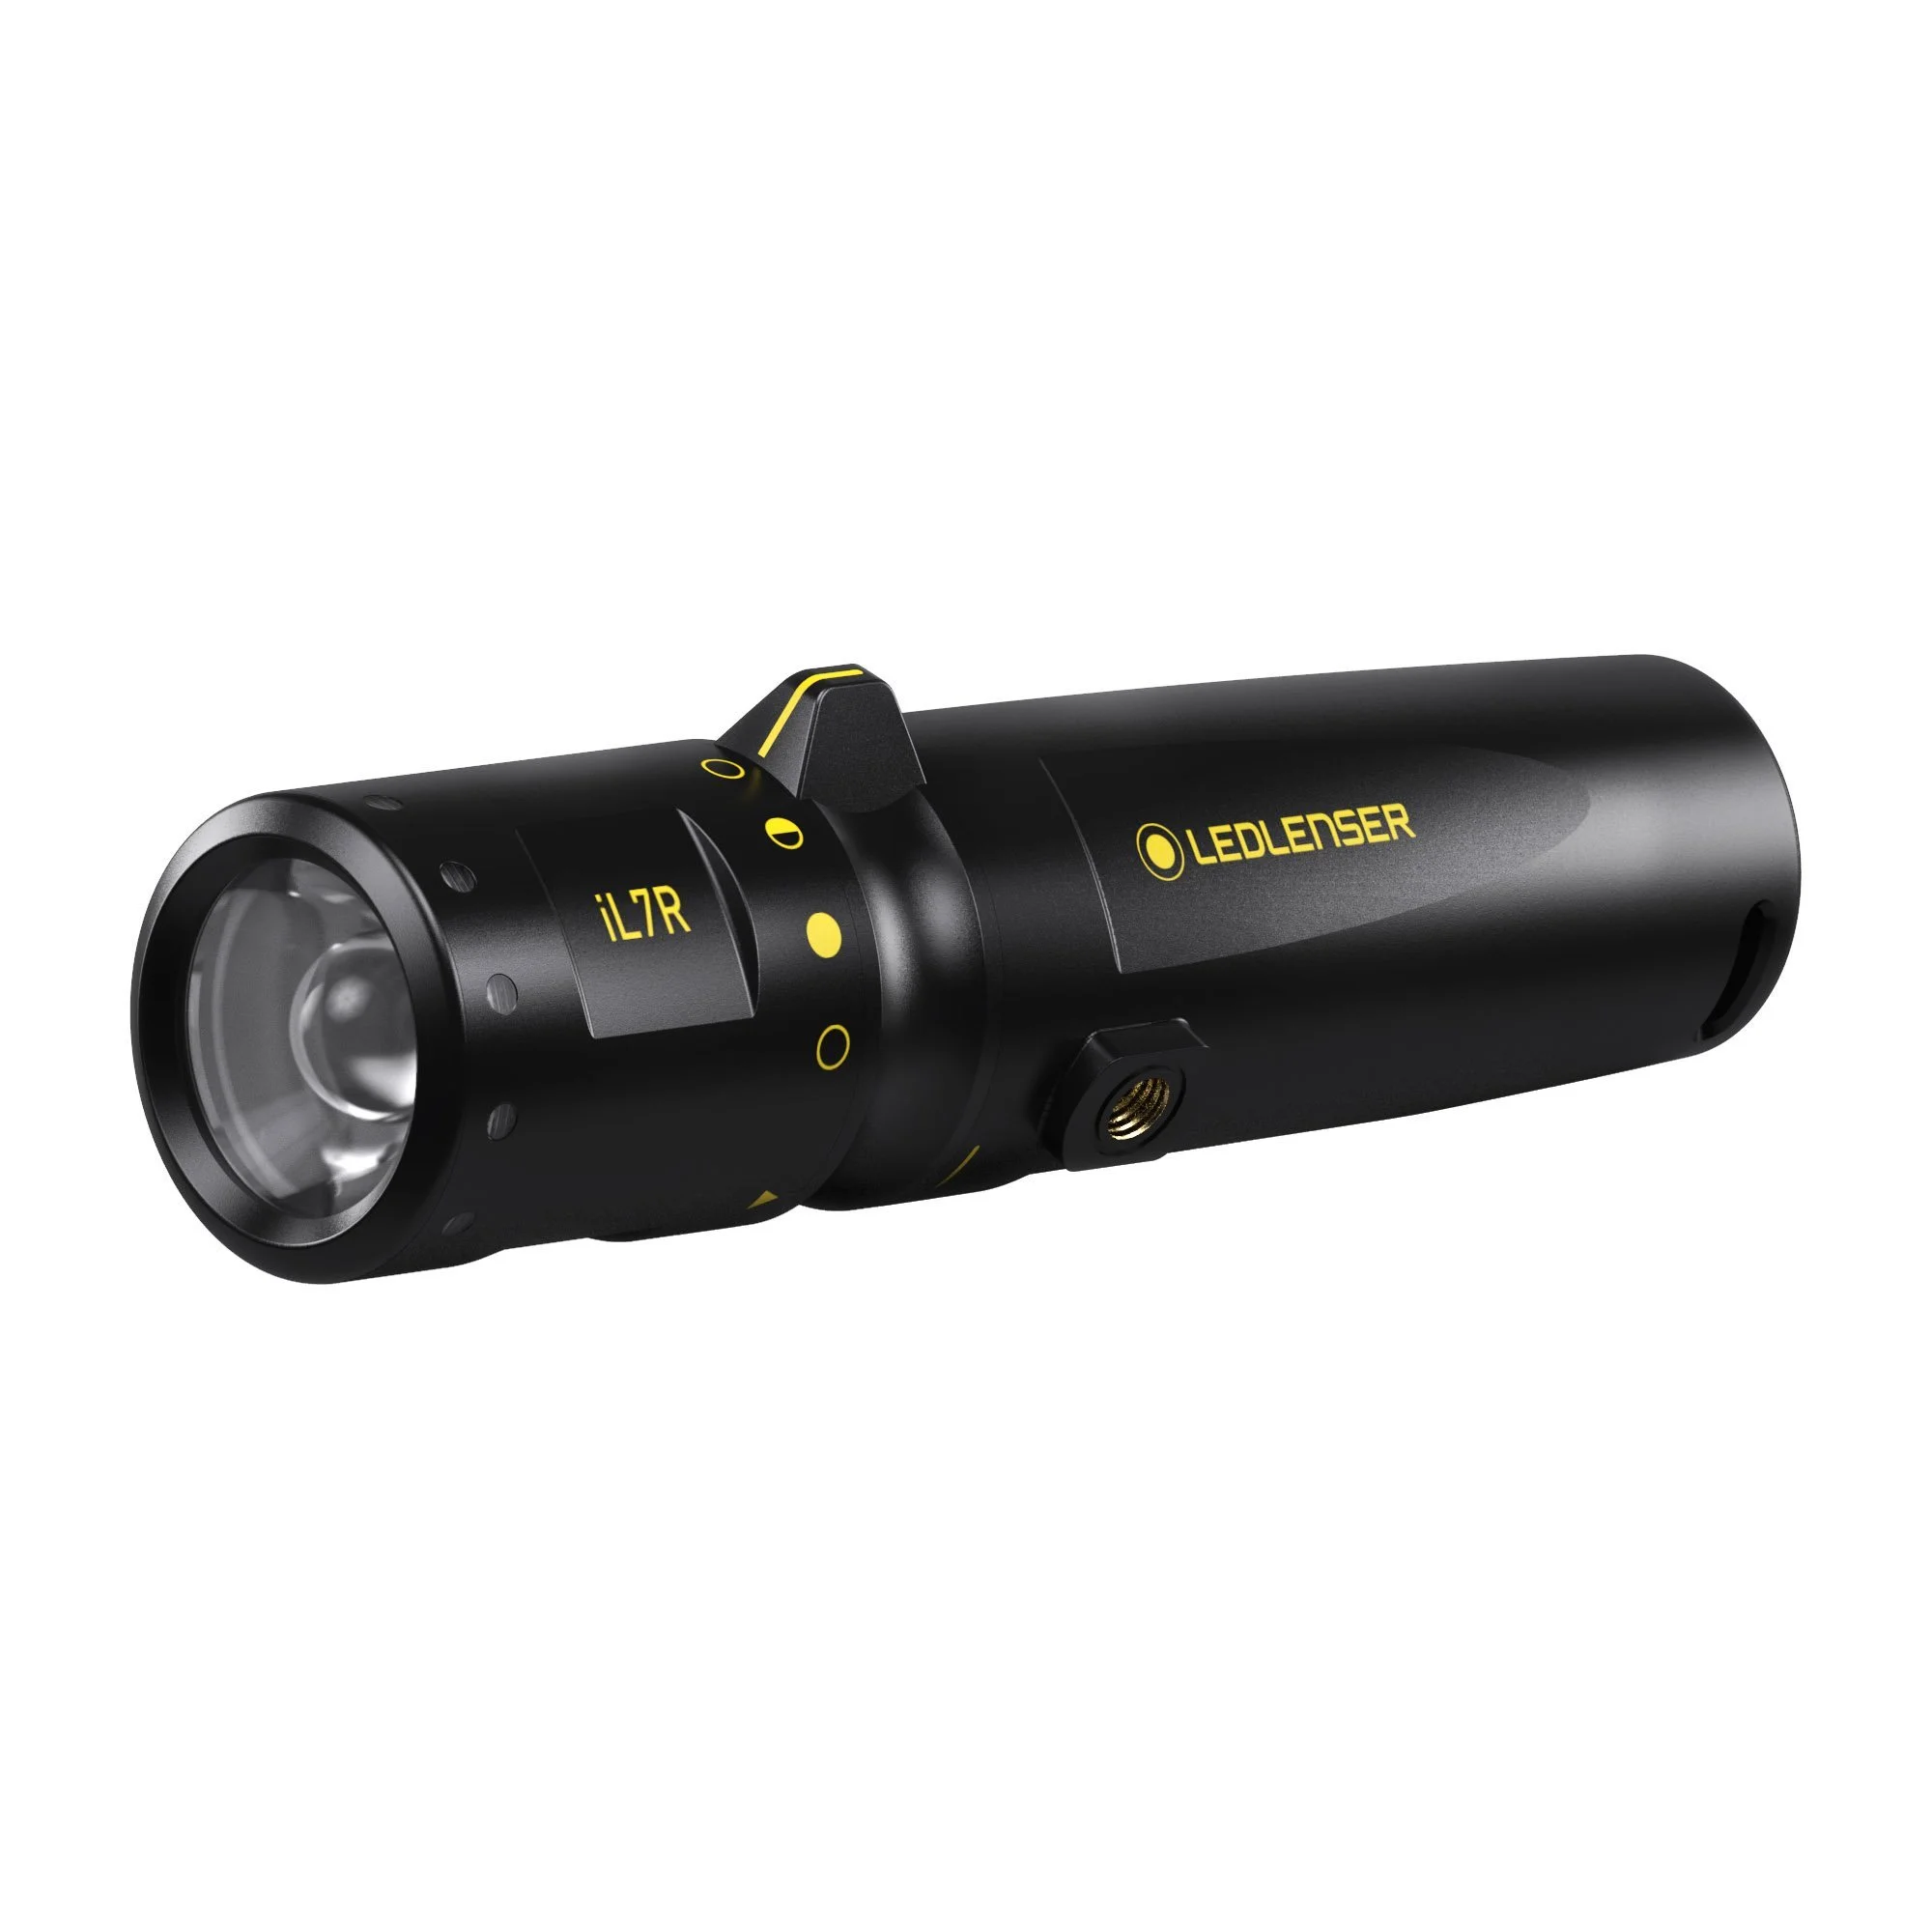 LED Lenser - i6R Industrial Rechargeable Flashlight, Black